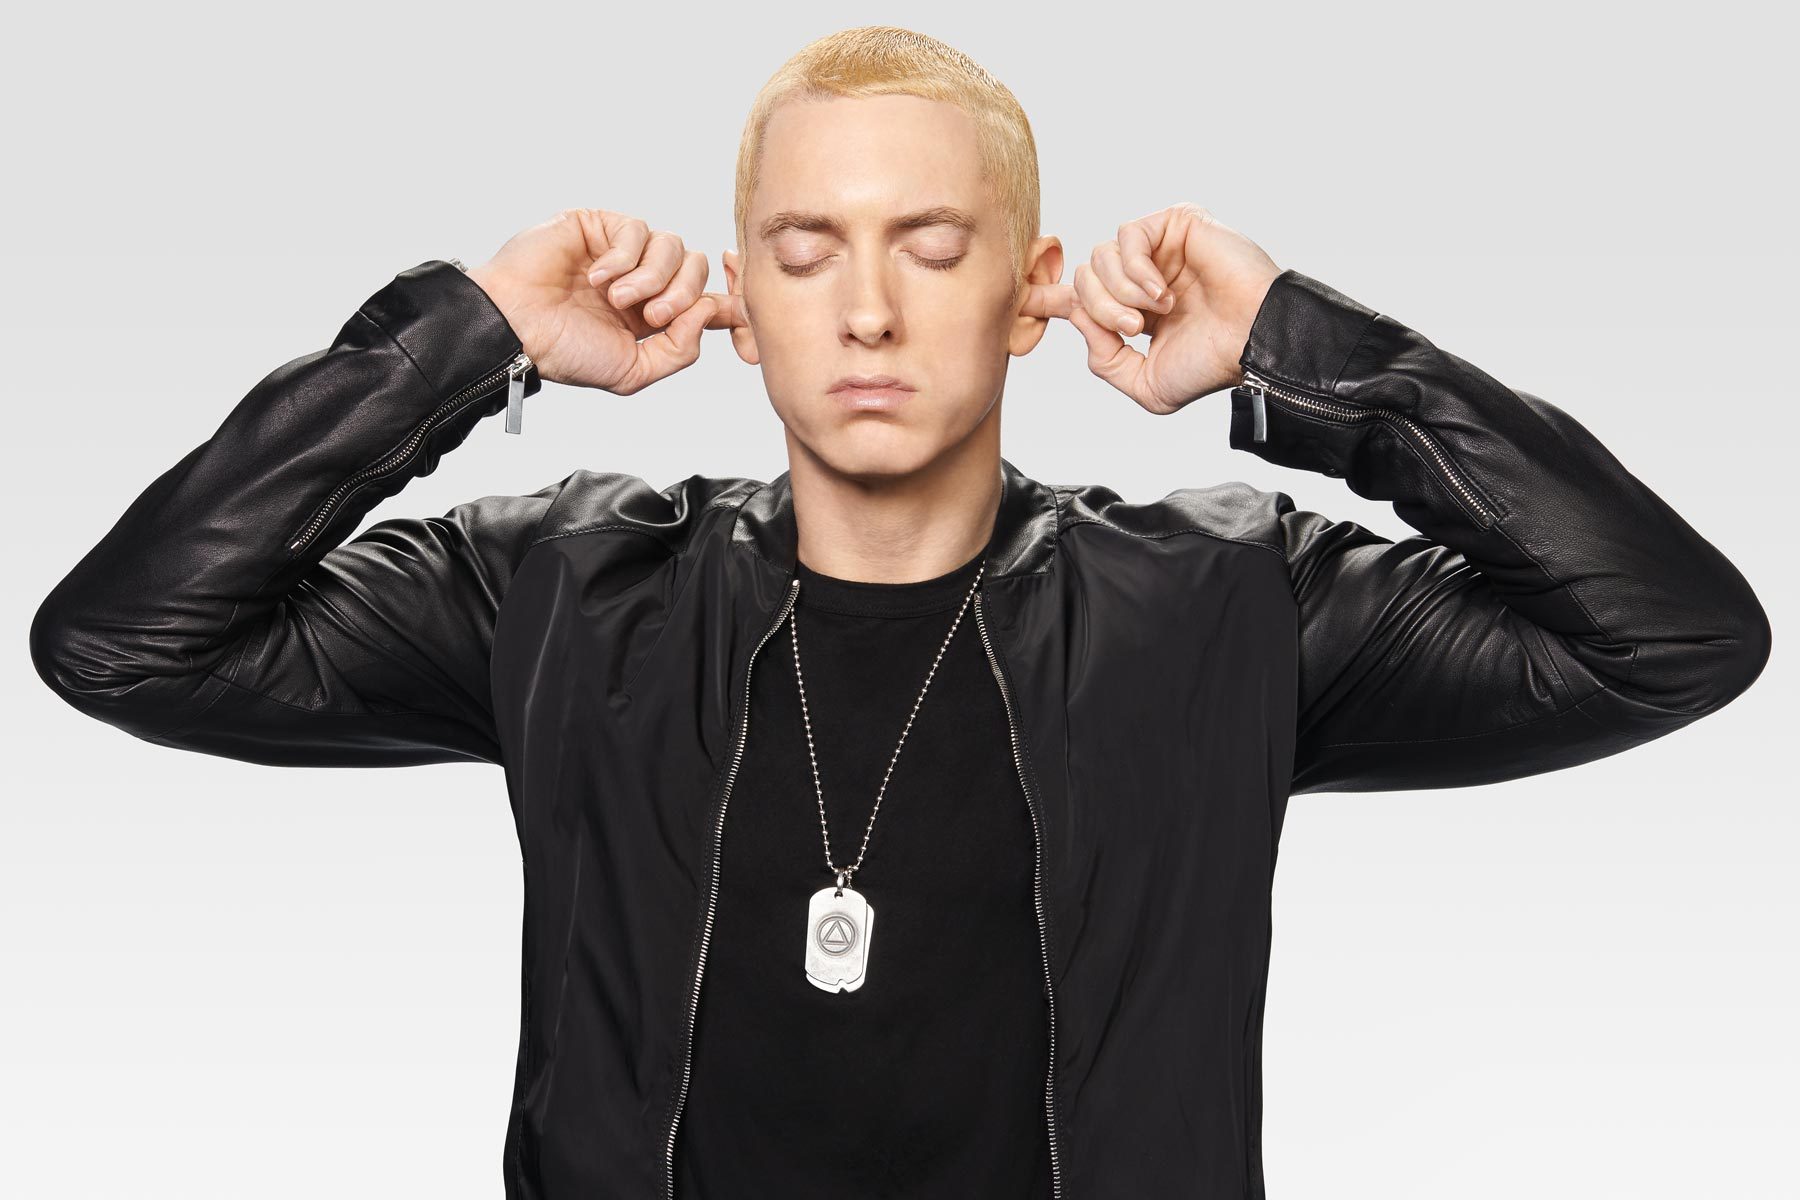 Eminem Plastic Surgery Changed His Face Pletely